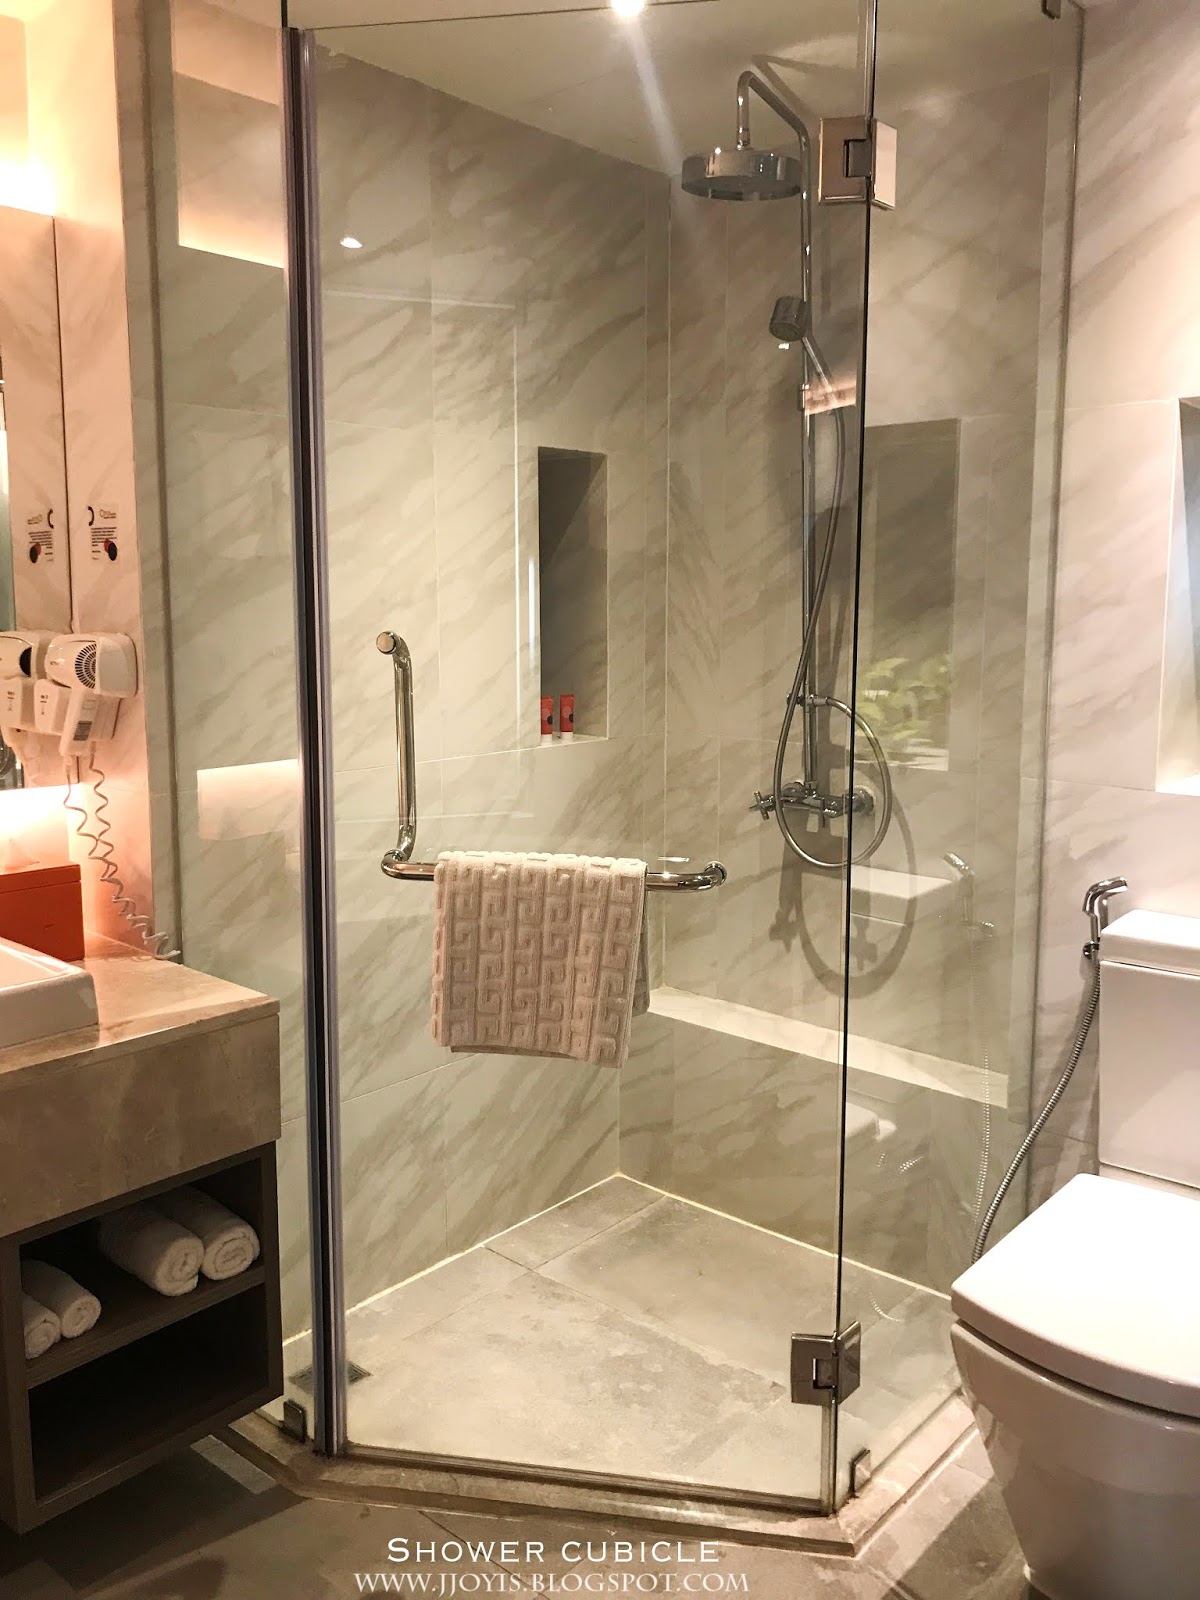 citrus suites compass hospitality grand suite bathroom shower